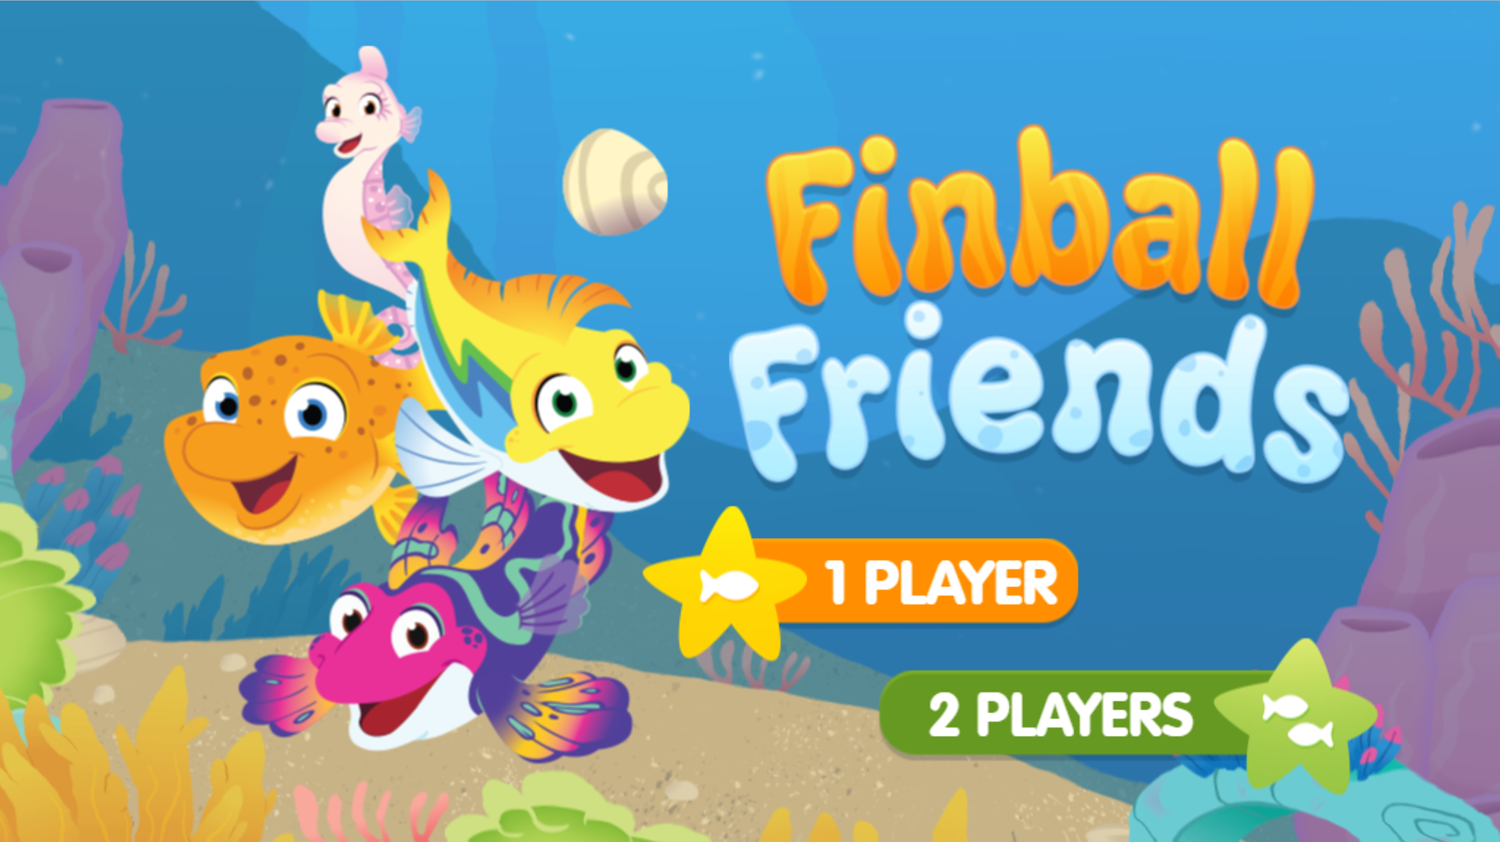 Splash and Bubbles Finball Friends Game Welcome Screen Screenshot.